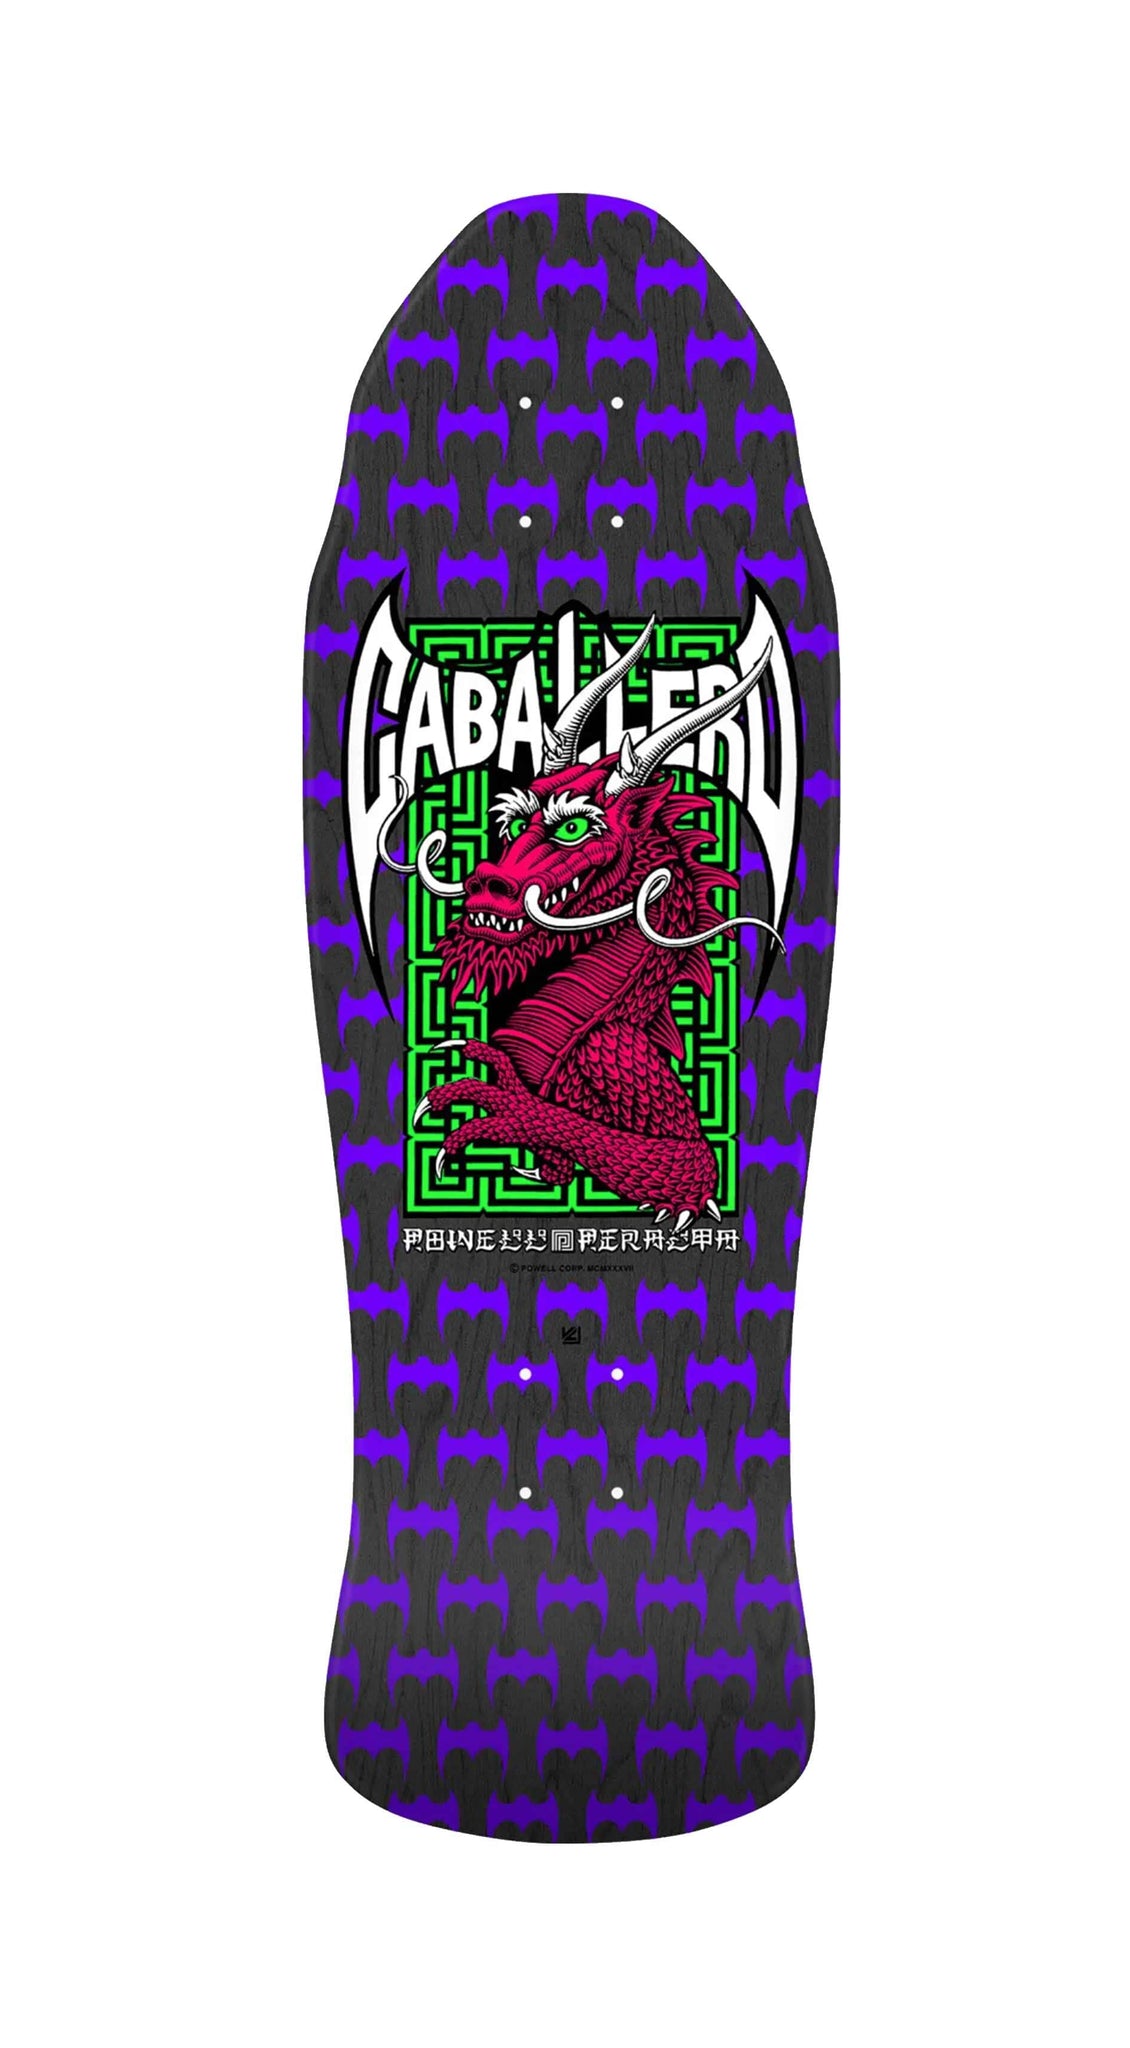 Powell Peralta Caballero Street Black Stained Reissue Skateboard Deck Prebook - Tabla Tablas Powell Peralta 